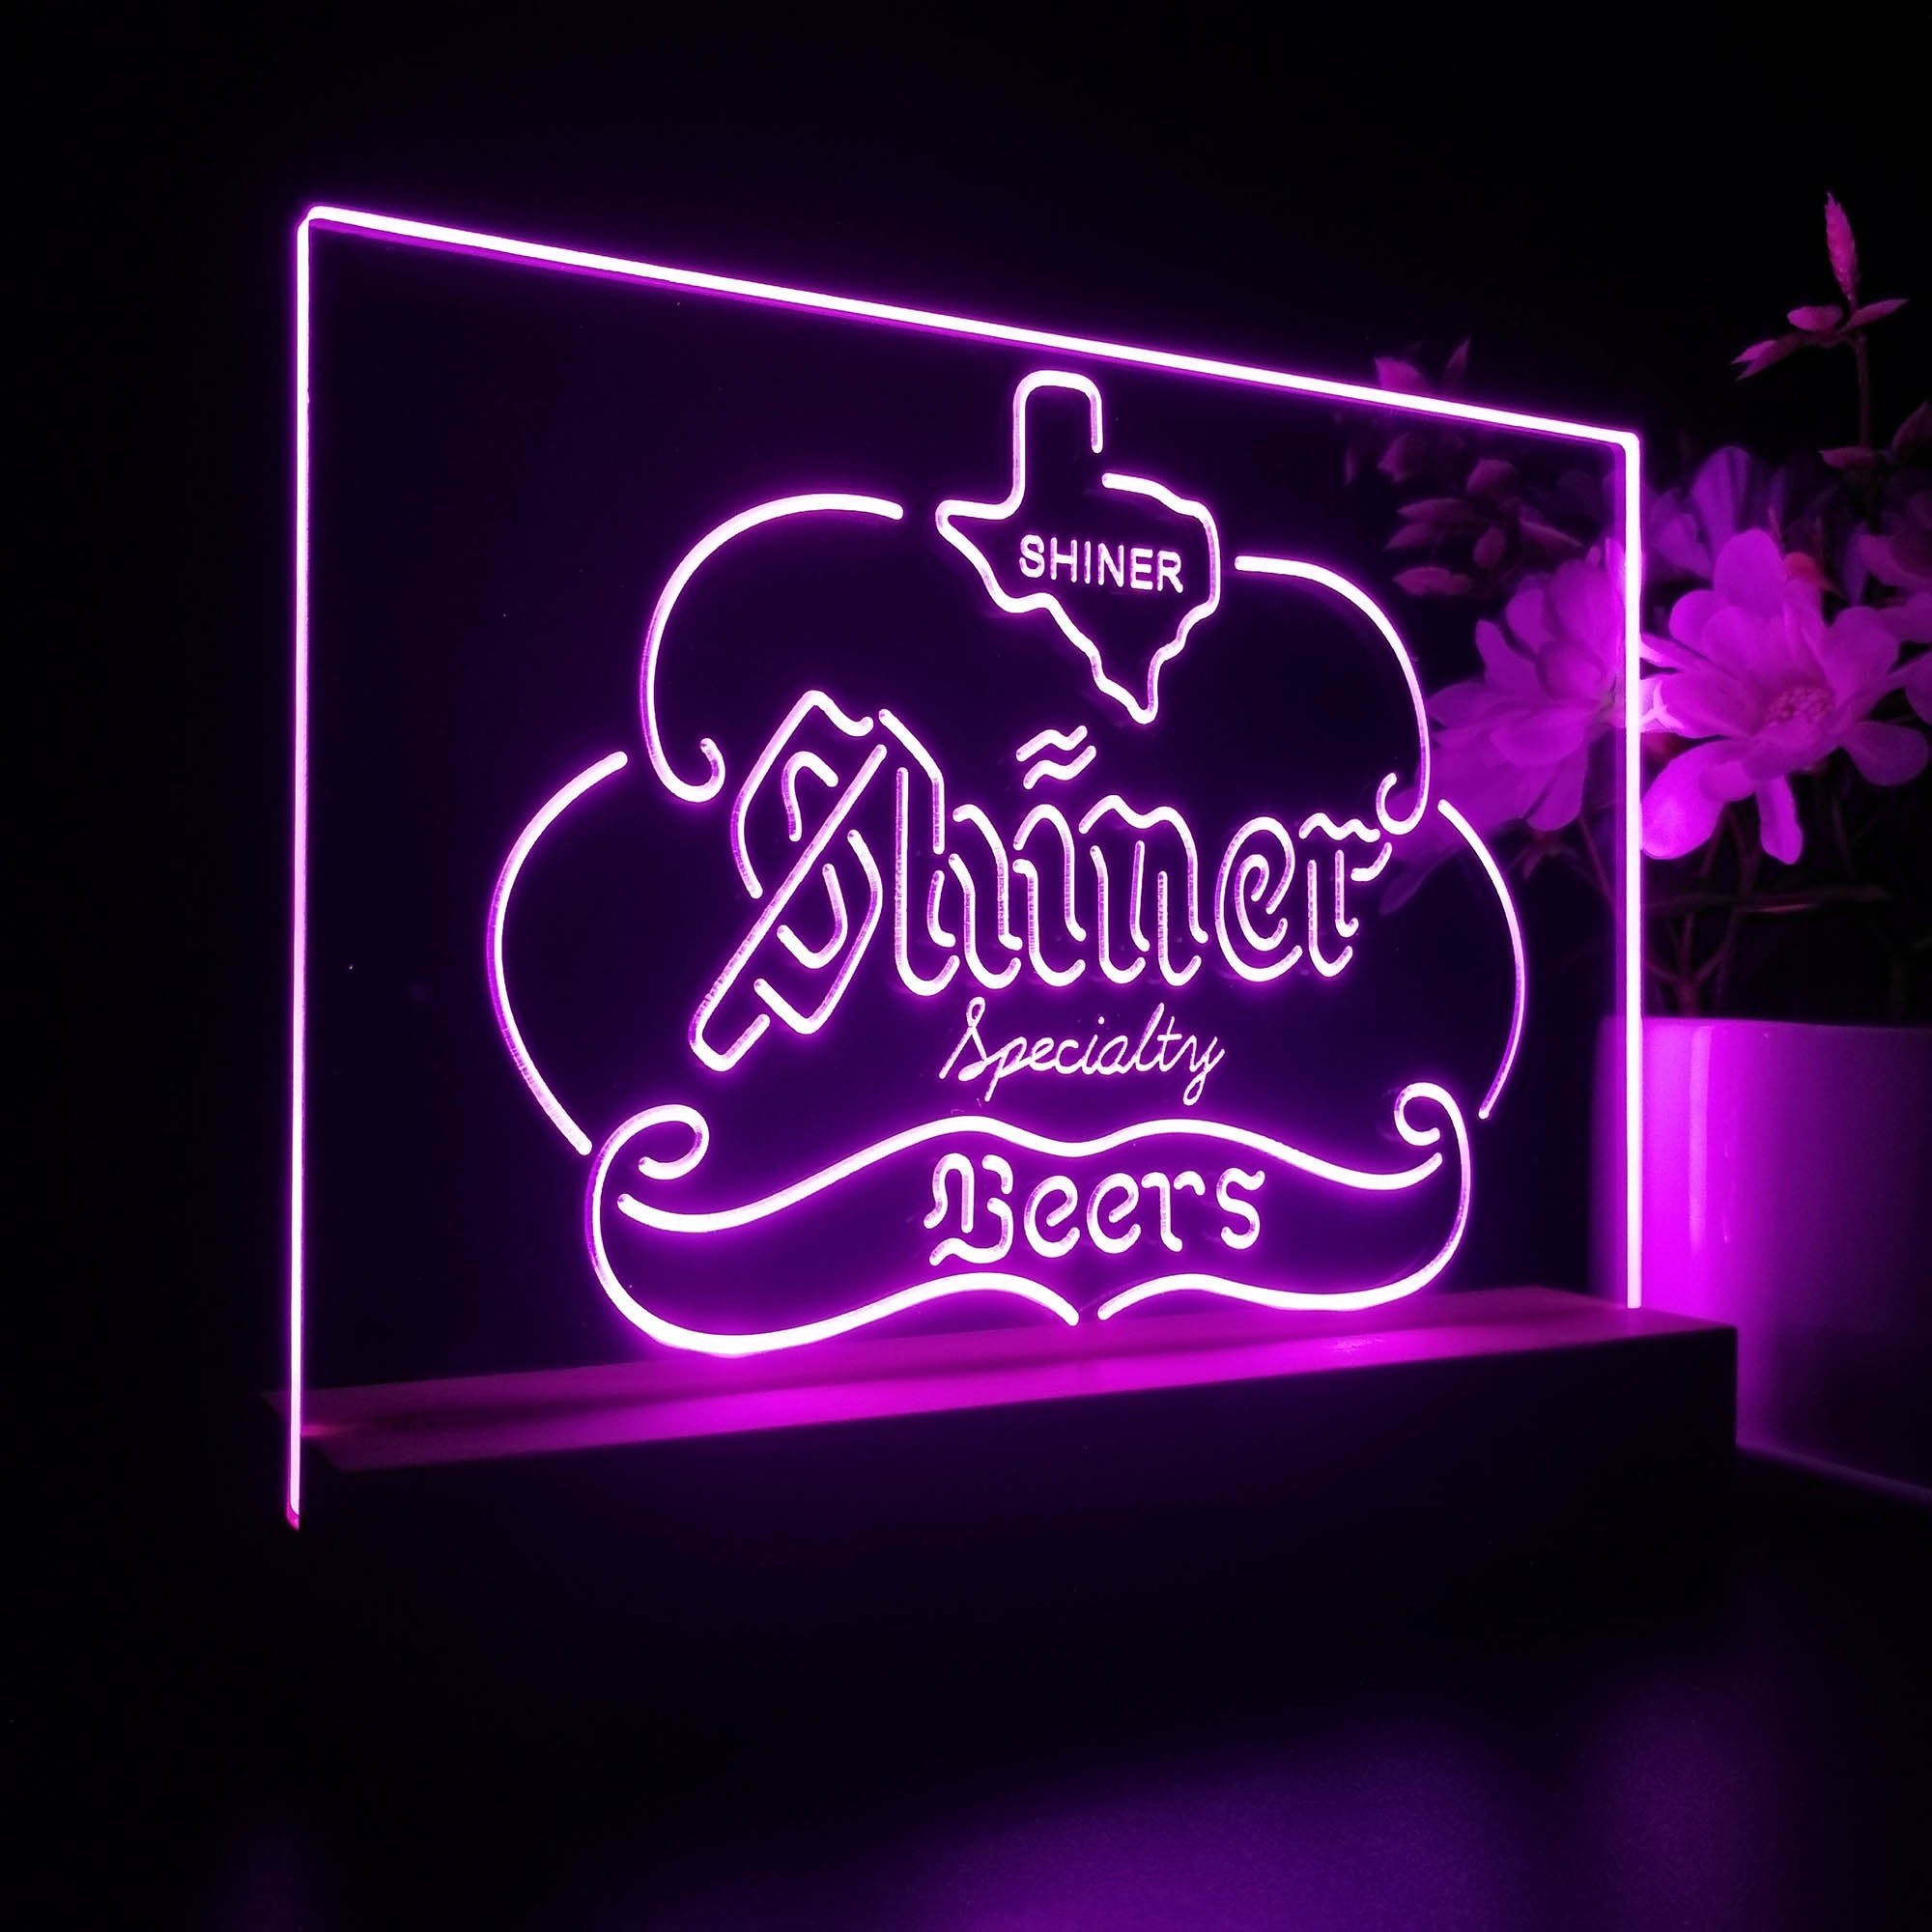 Shiner Beer Specialty Bar Neon Sign Pub Bar Lamp